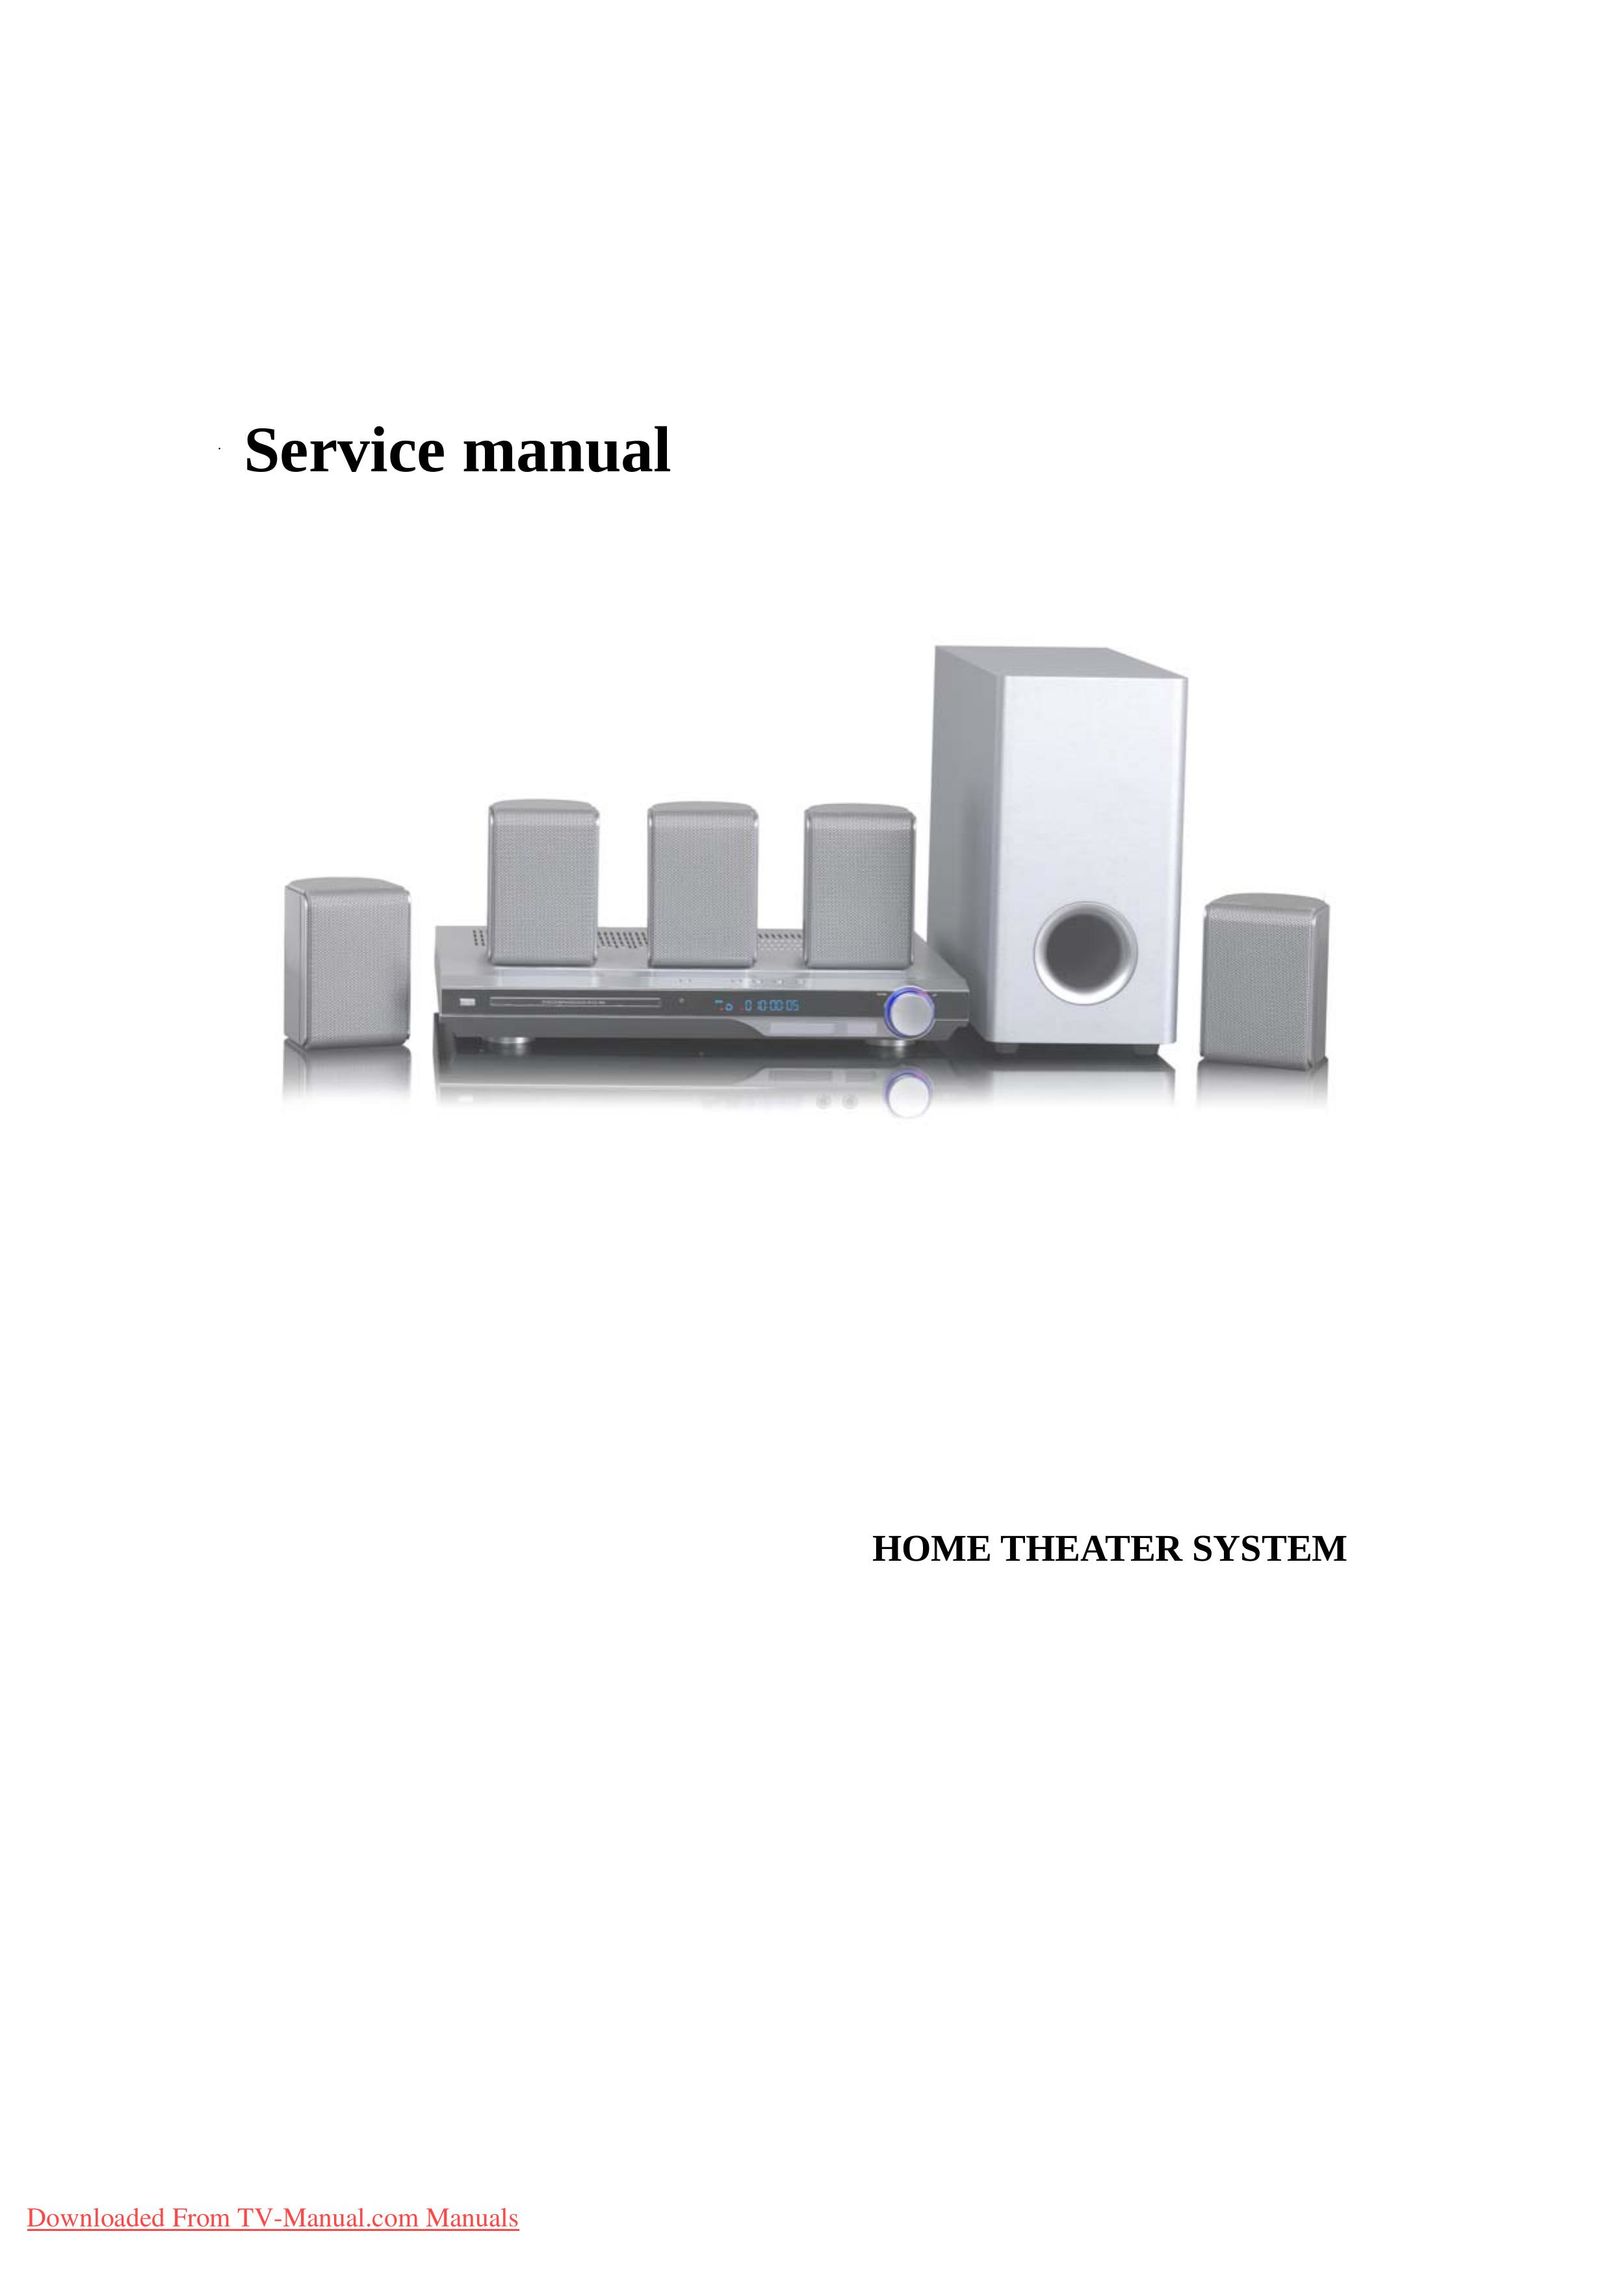 Hitachi HT5002 Home Theater Server User Manual